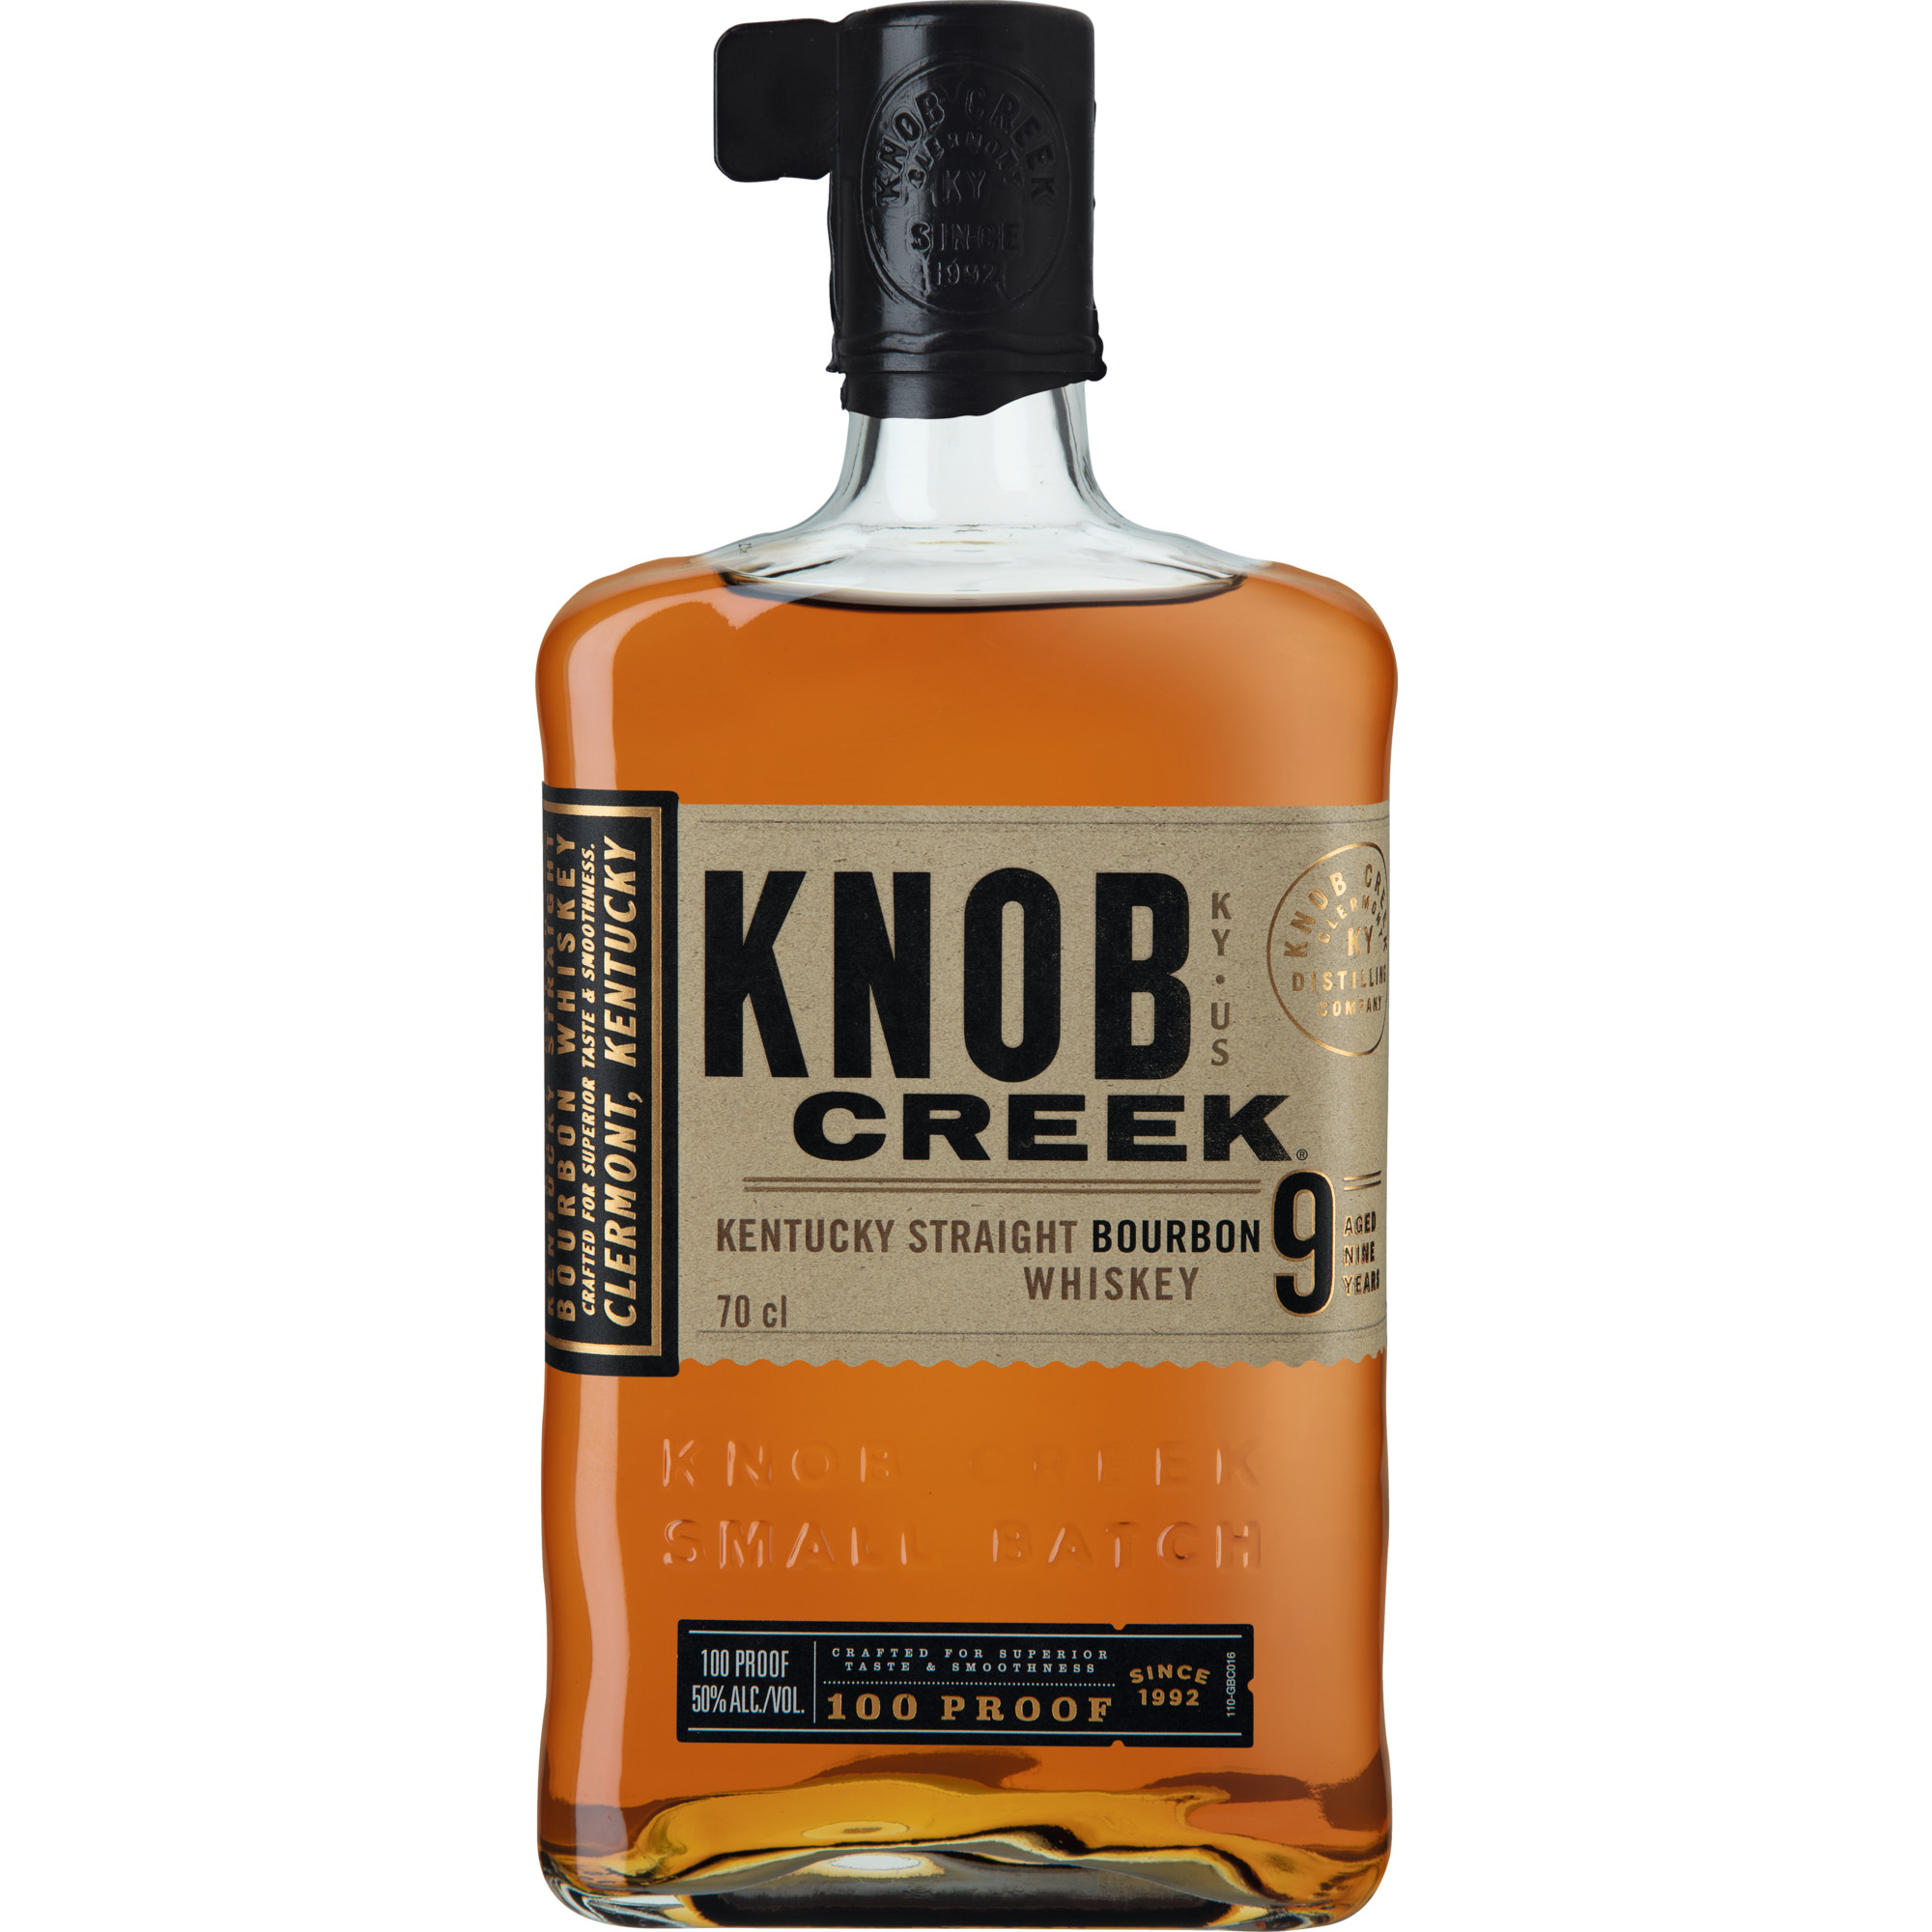 Knob Creek Kentucky Straight Bourbon Whiskey, 0,7 L, 50% Vol., Kentucky, Spirituosen Knob Creek Distillery, Clermont, Kentucky, USA / BEAM INC.UK LTD. 310 St. Vincent Street Glasgow, G2 5RG, UK Hawesko DE